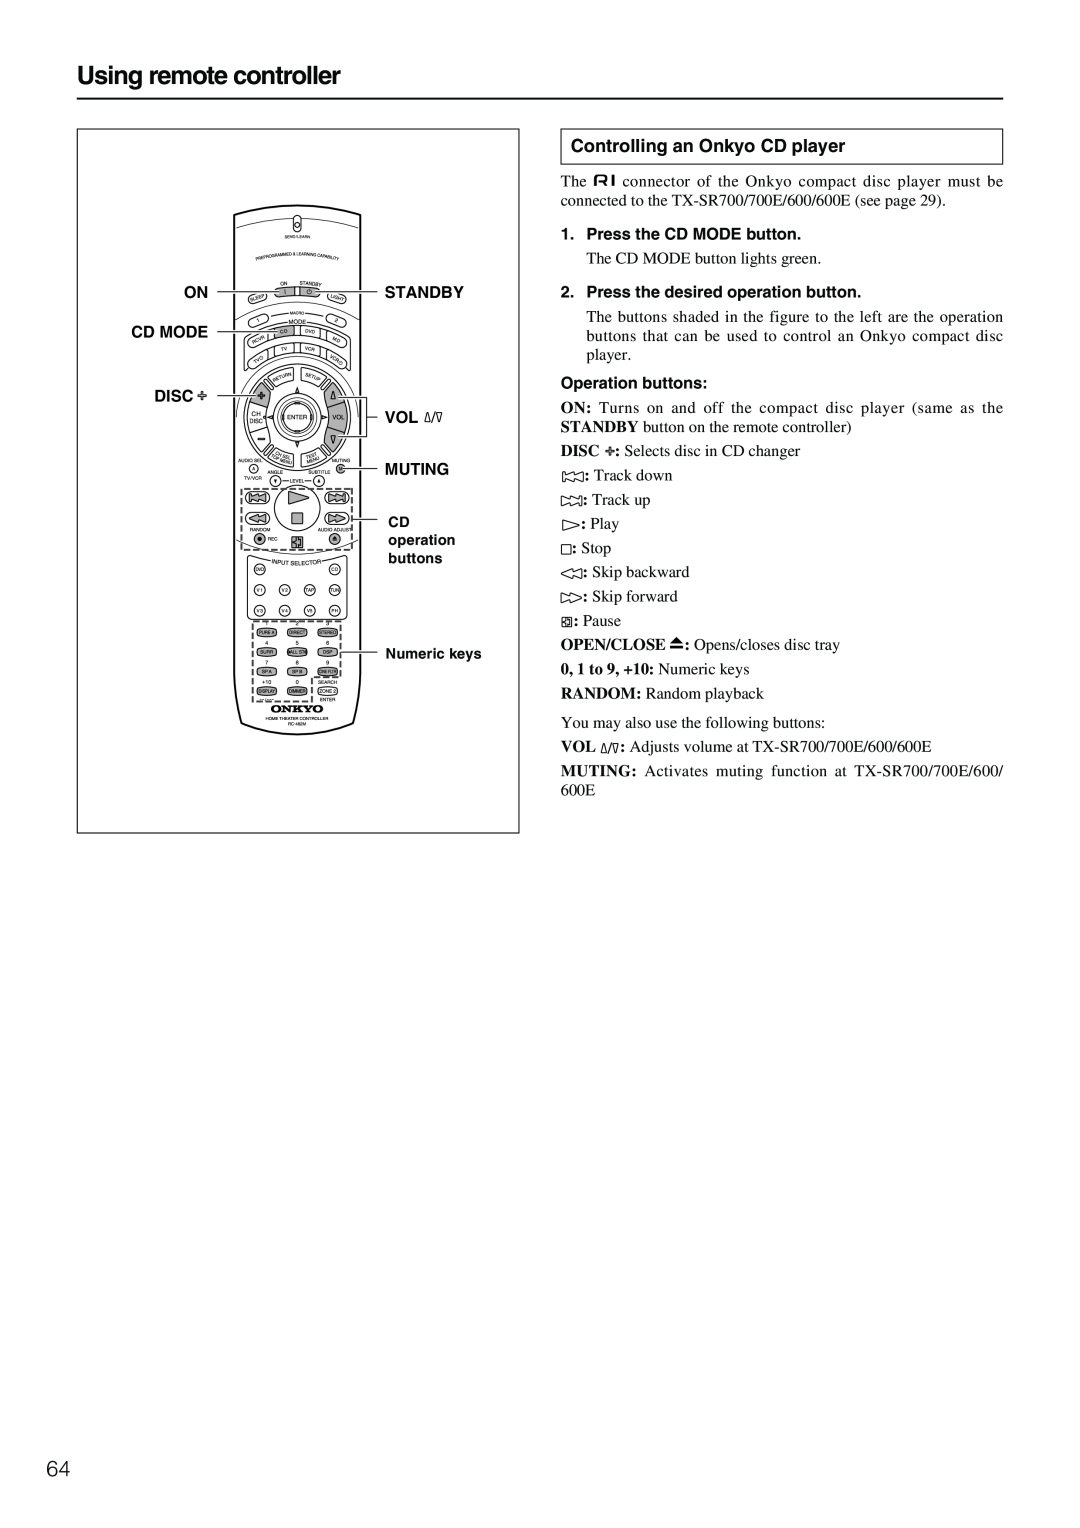 Onkyo TX-SR700/700E, TX-SR600/600E Using remote controller, Controlling an Onkyo CD player, 0, 1 to 9, +10: Numeric keys 